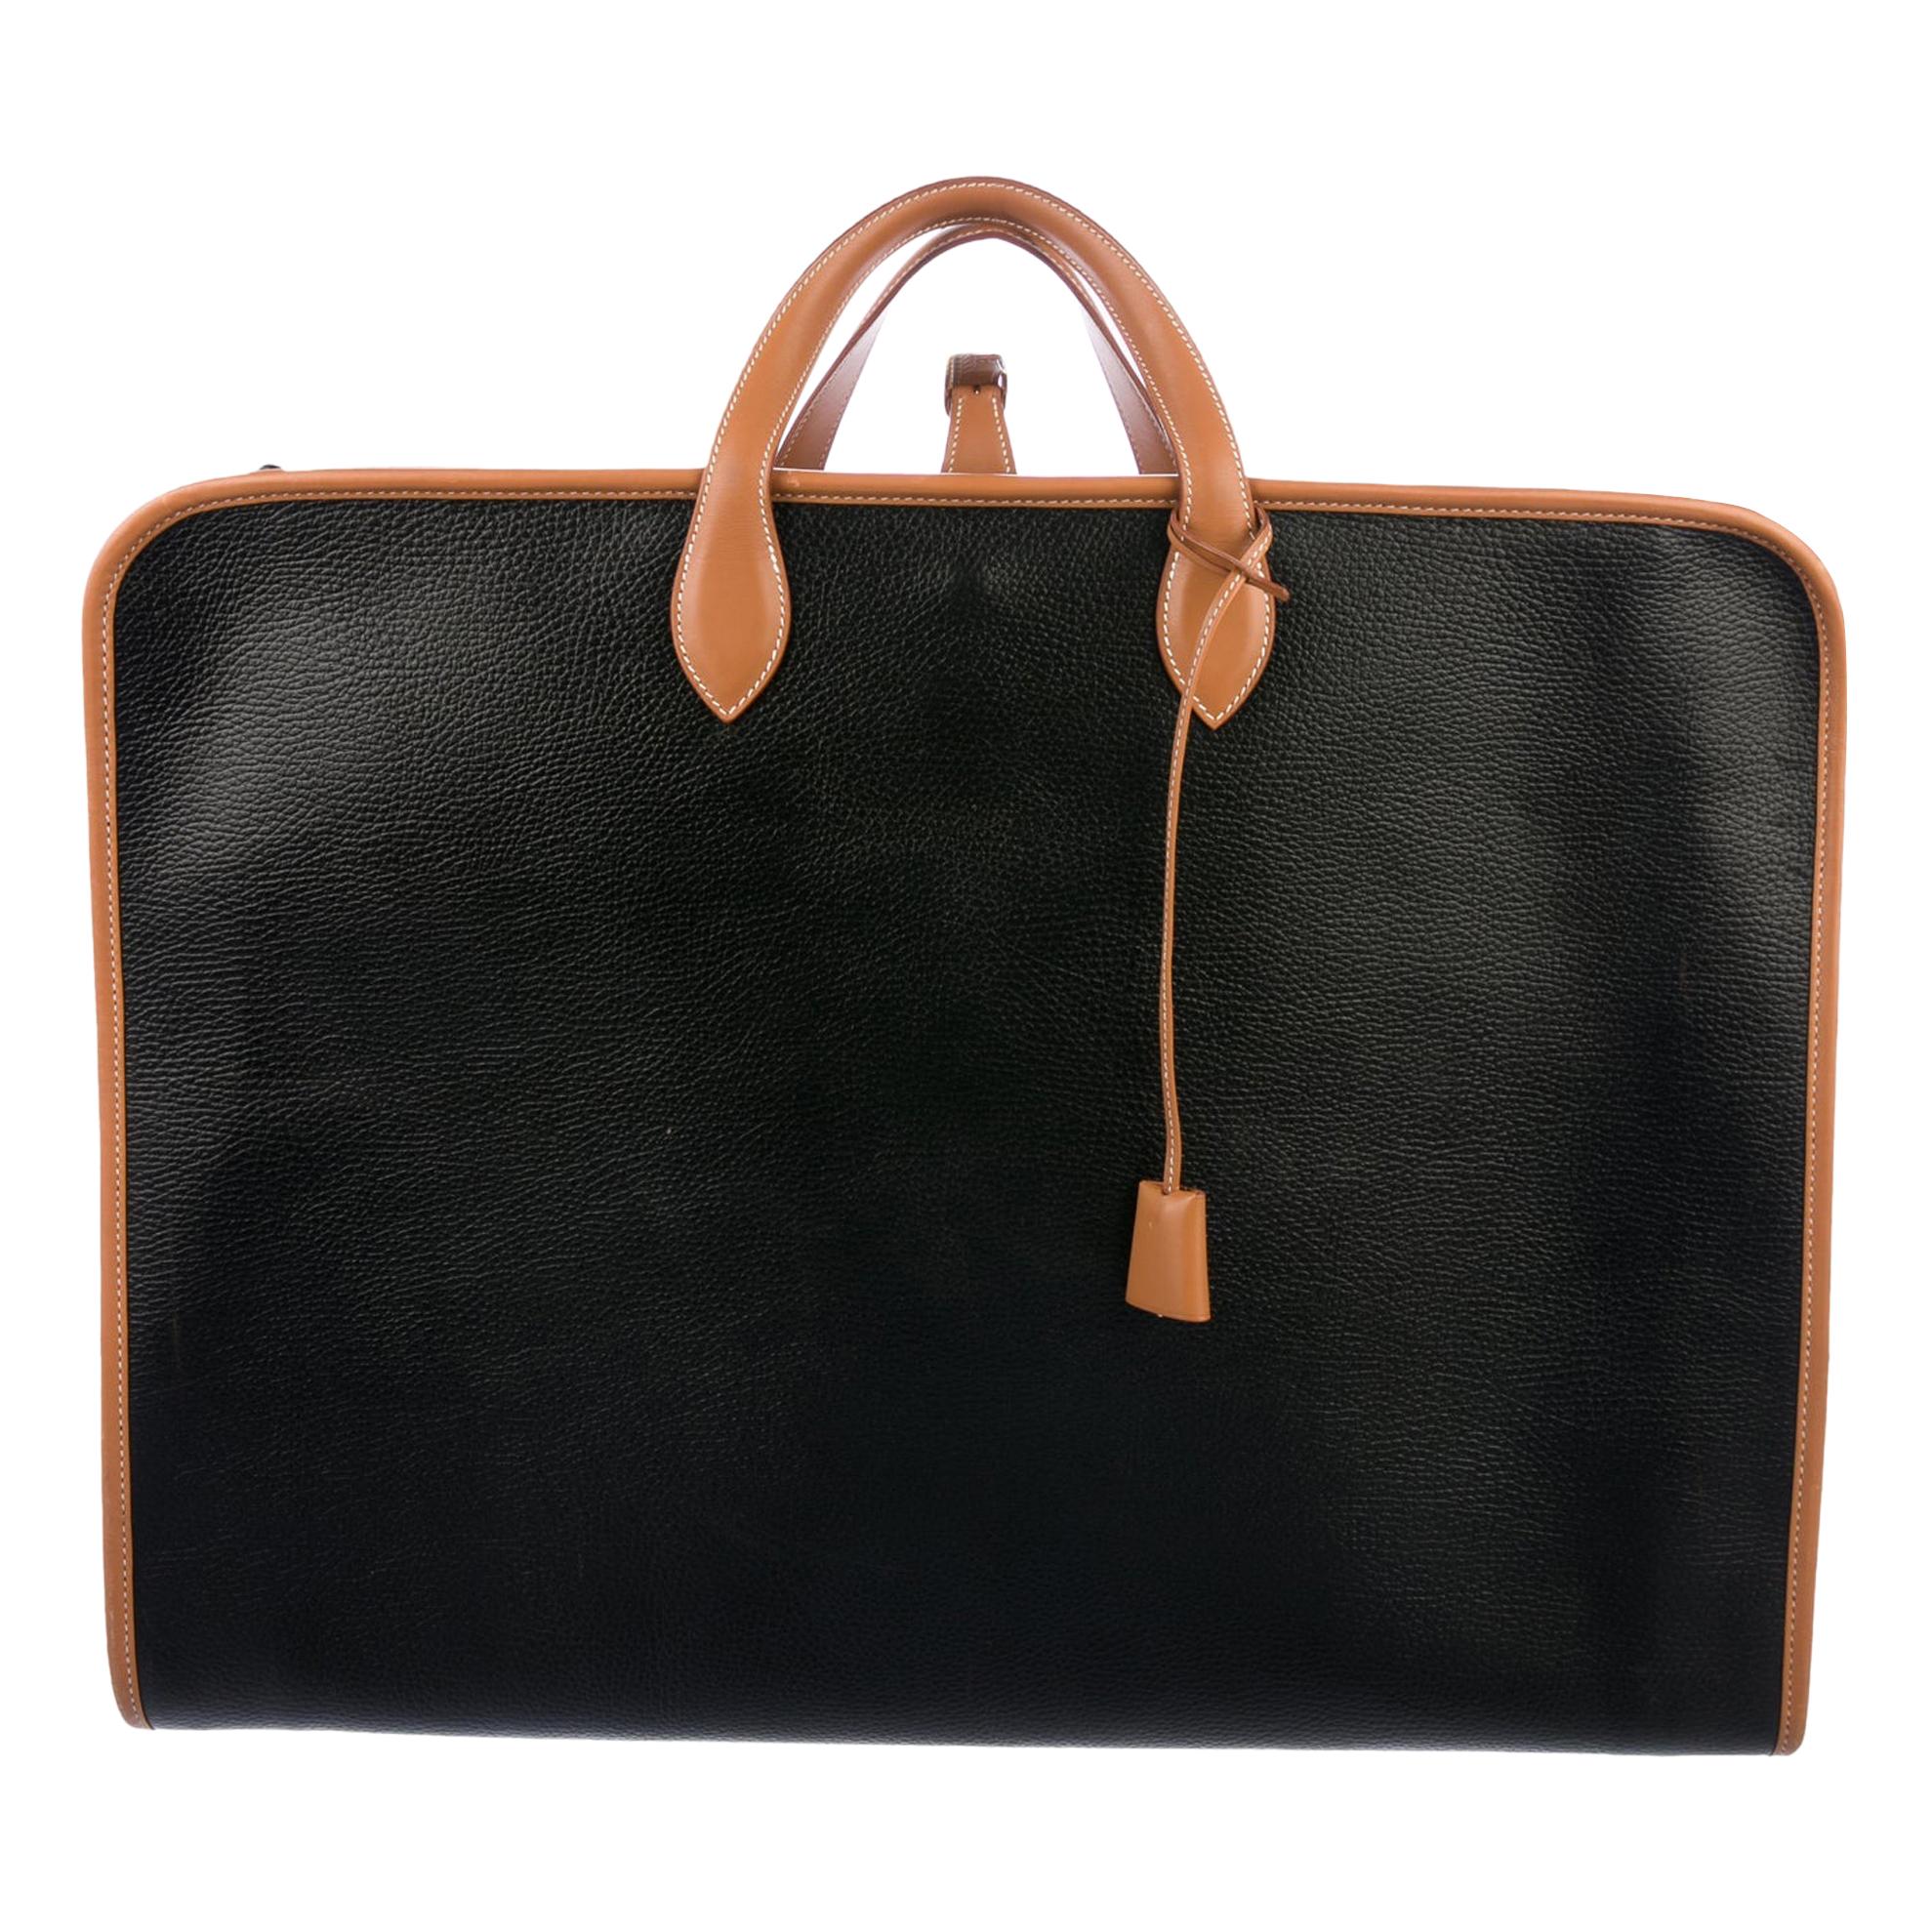 Hermes Black Cognac Leather Men's Women's Carryall Top Handle Travel Tote Bag